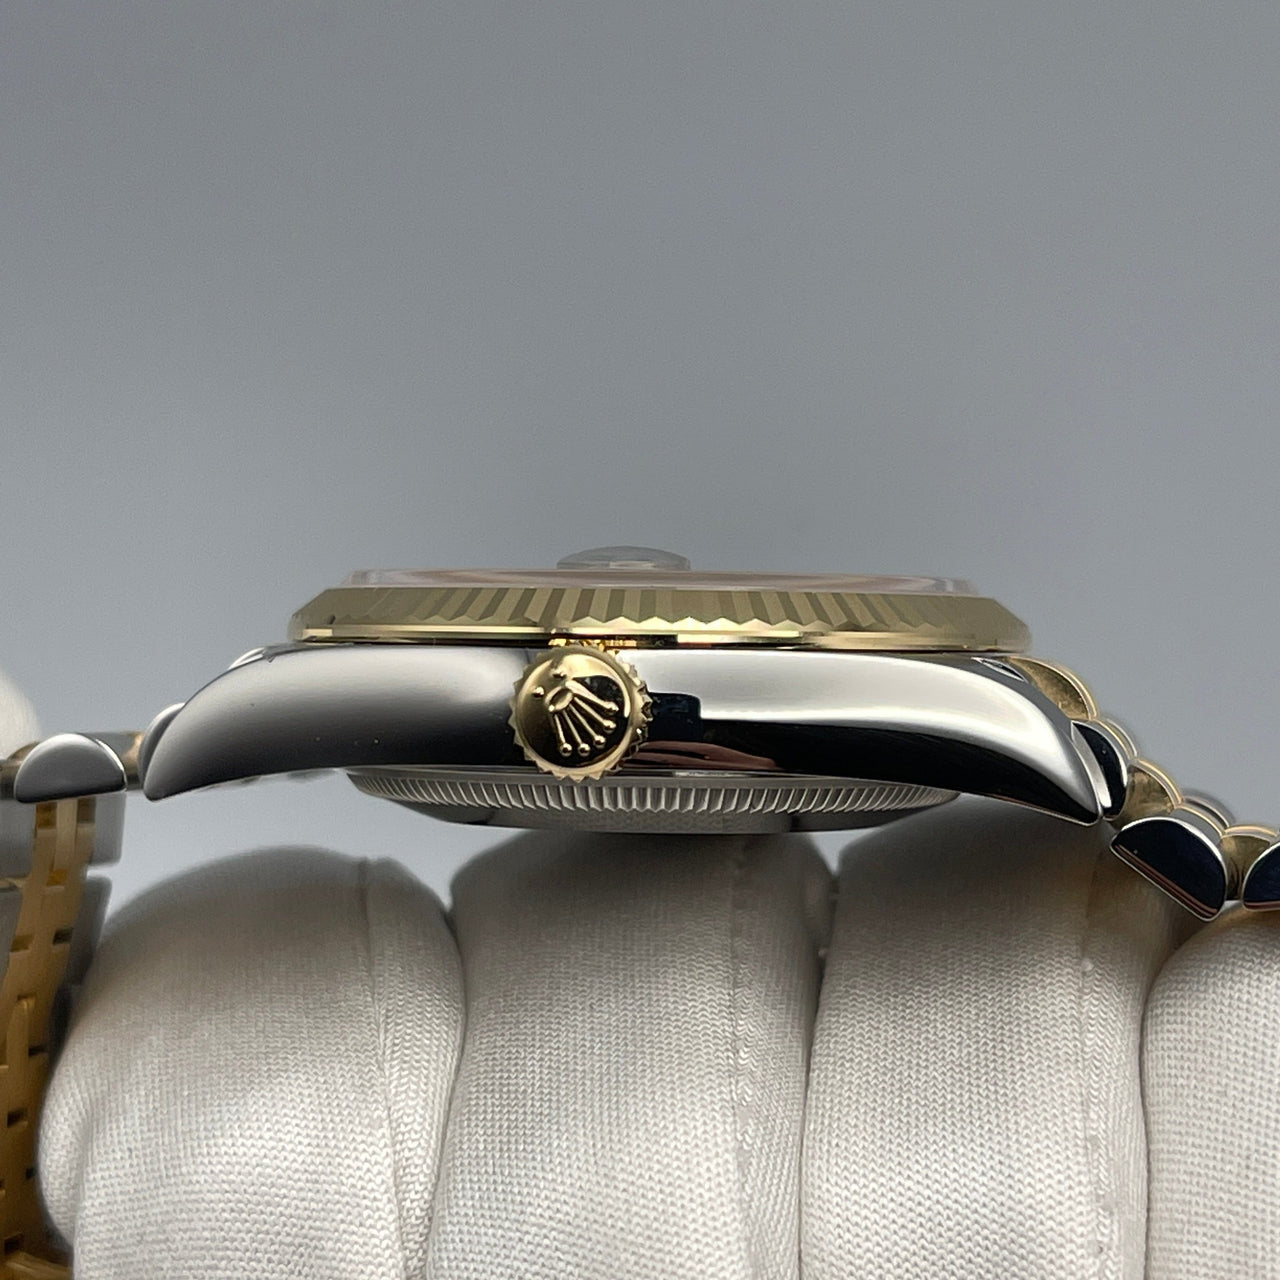 Rolex Datejust 36 Yellow Gold & Steel Slate 'Wimbledon' Dial Jubilee 126233 (2021) Wrist Aficionado